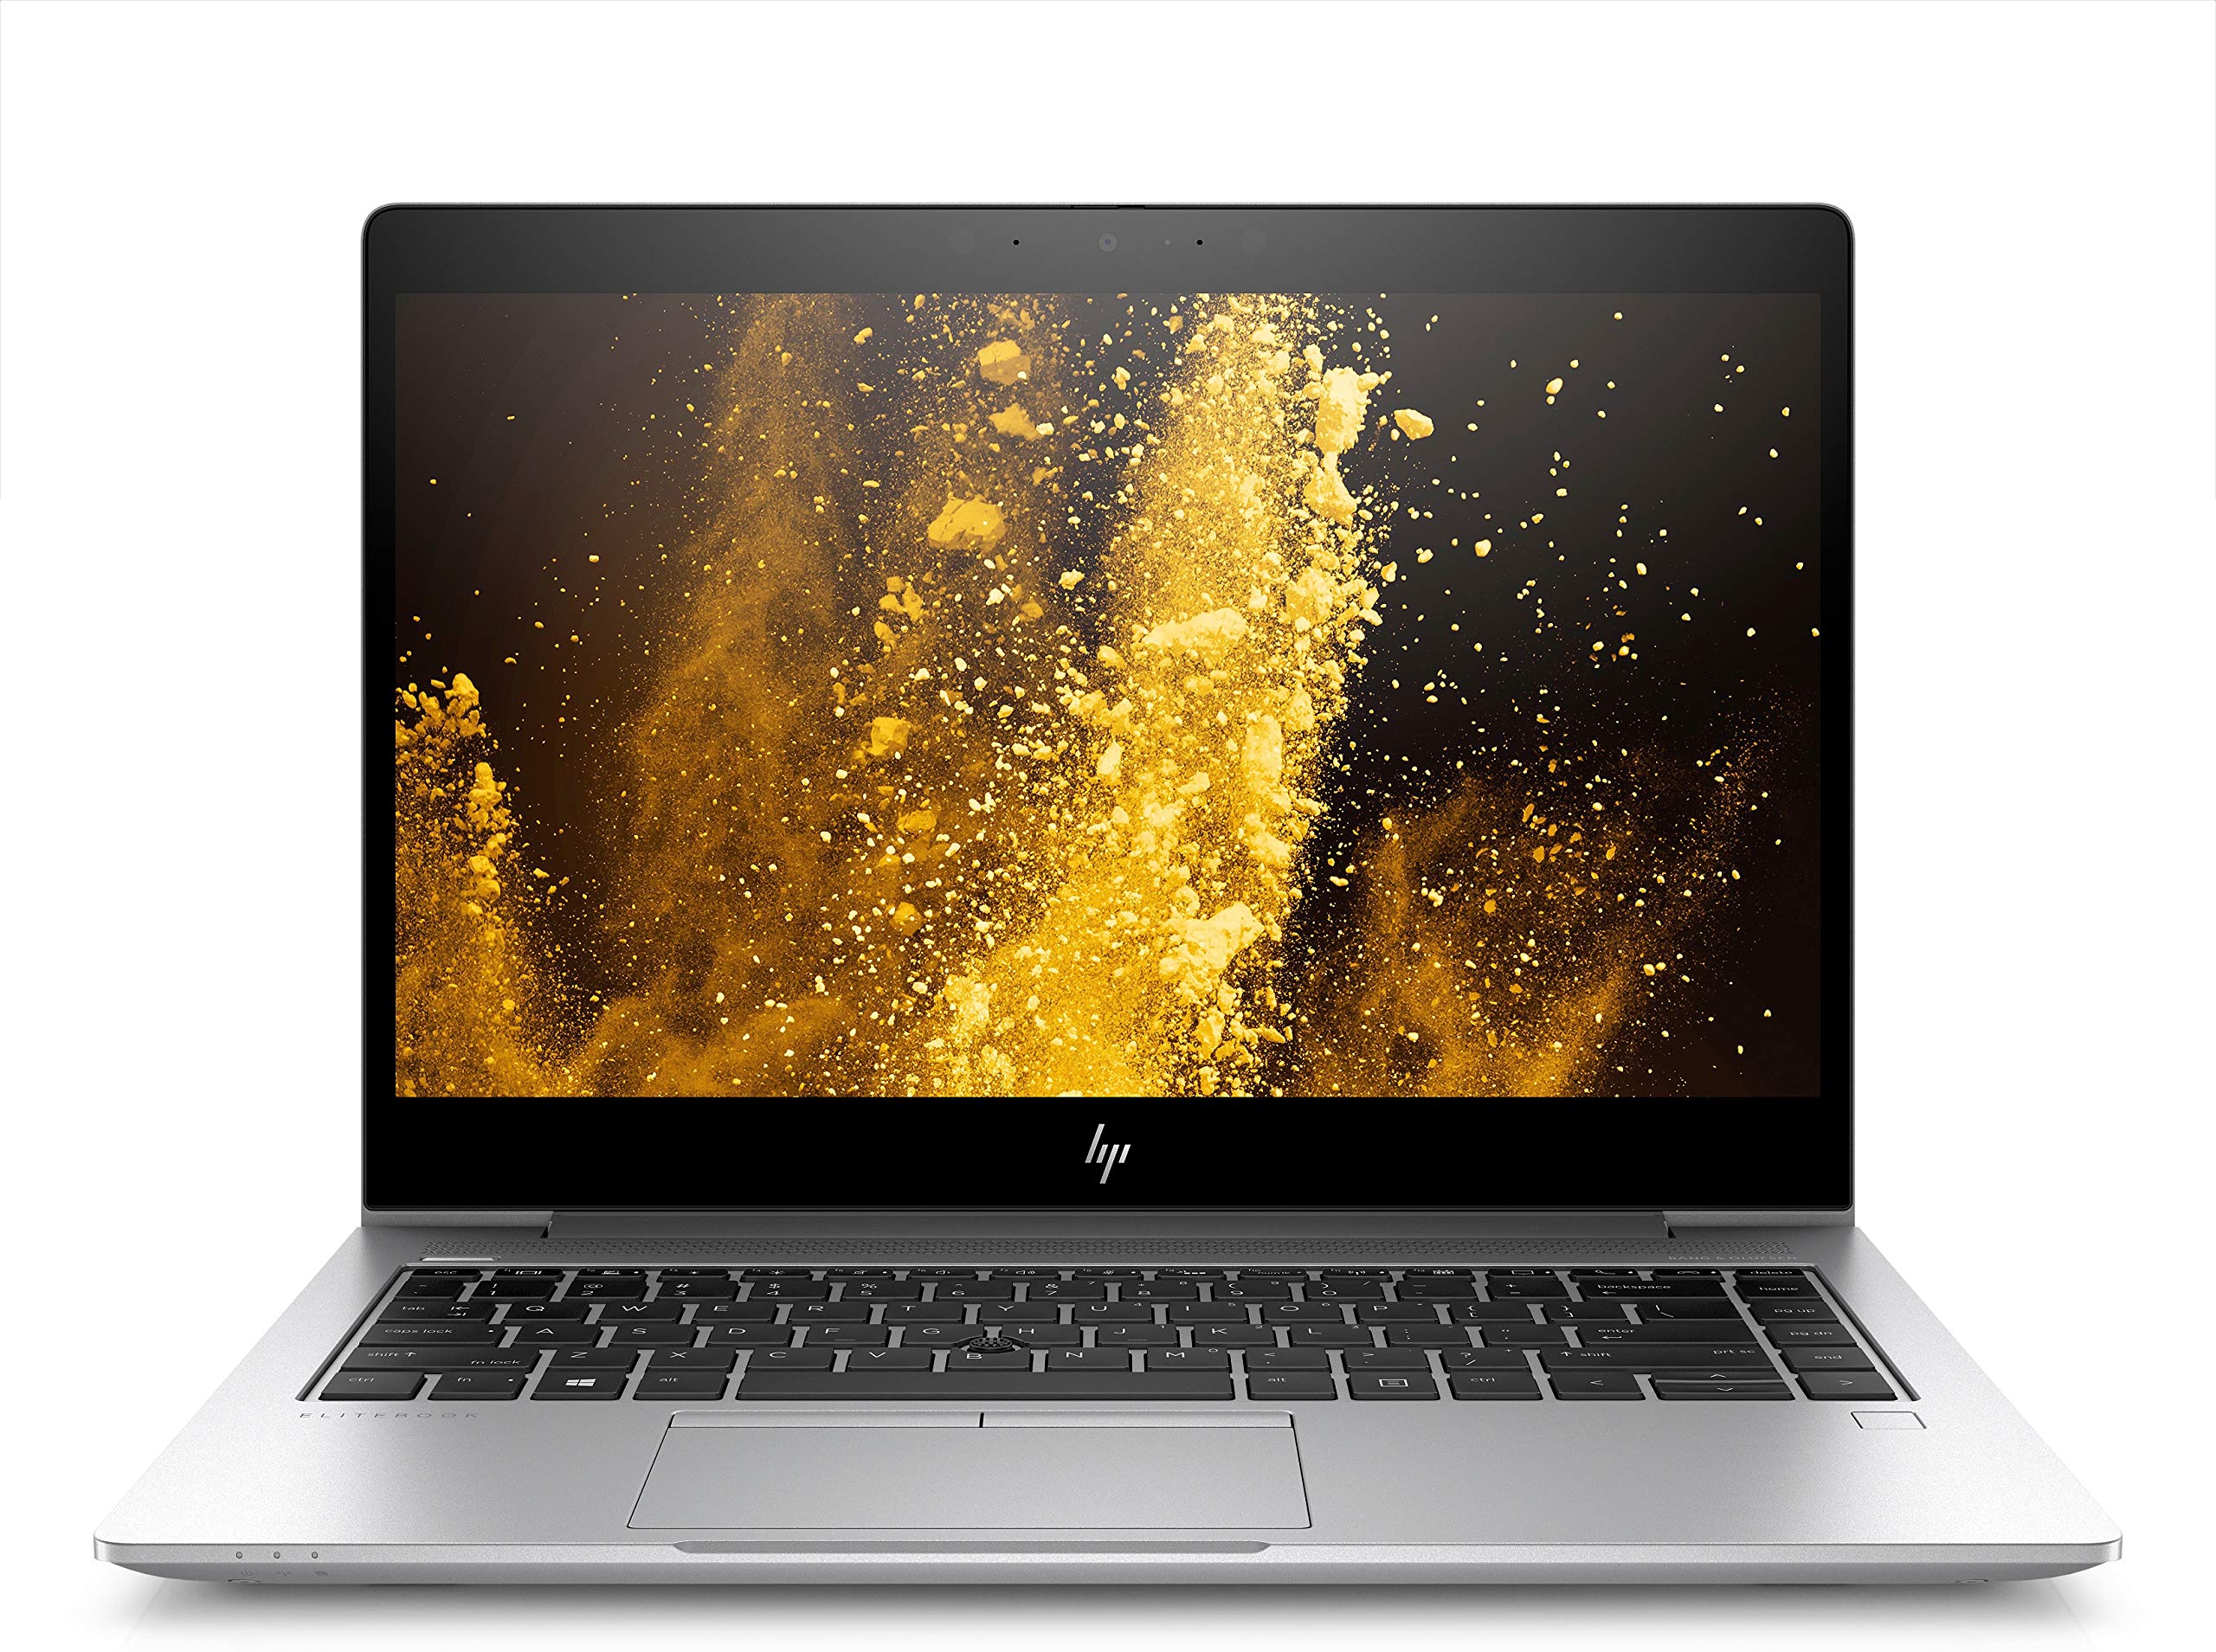 HP EliteBook 840 G6 14 Notebook - 1920 x 1080 - Core i7 i7-8665U - 16 GB RAM - 512 GB SSD - Windows 10 Pro 64-bit - Intel UHD Graphics 620 - in-Plane Switching (IPS) Technology(Renewed)